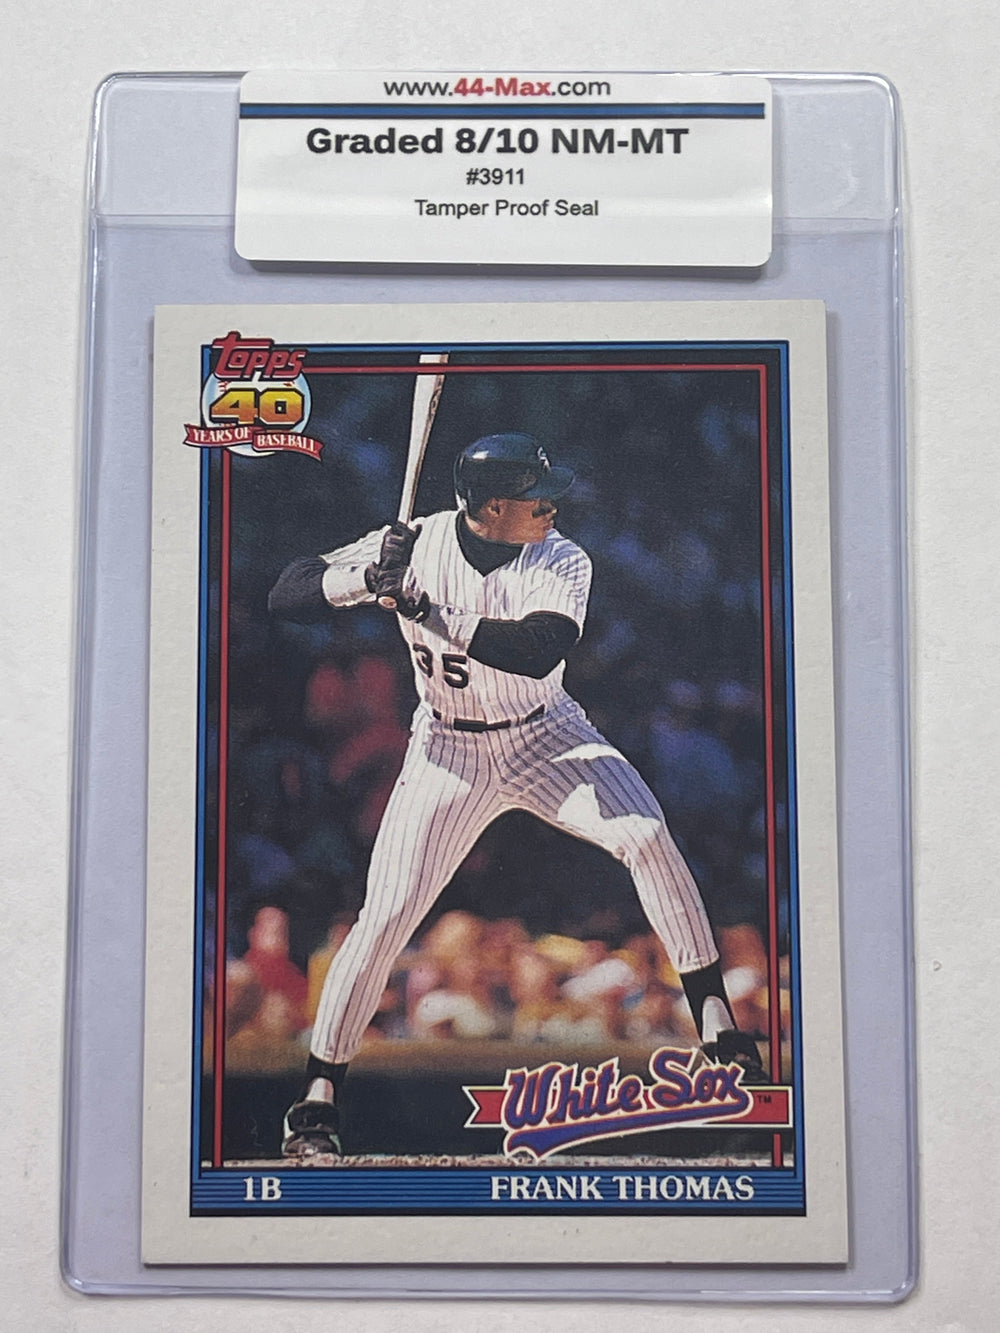 Frank Thomas 1991 Topps Baseball Card. 44-Max 8/10 NM-MT #3911